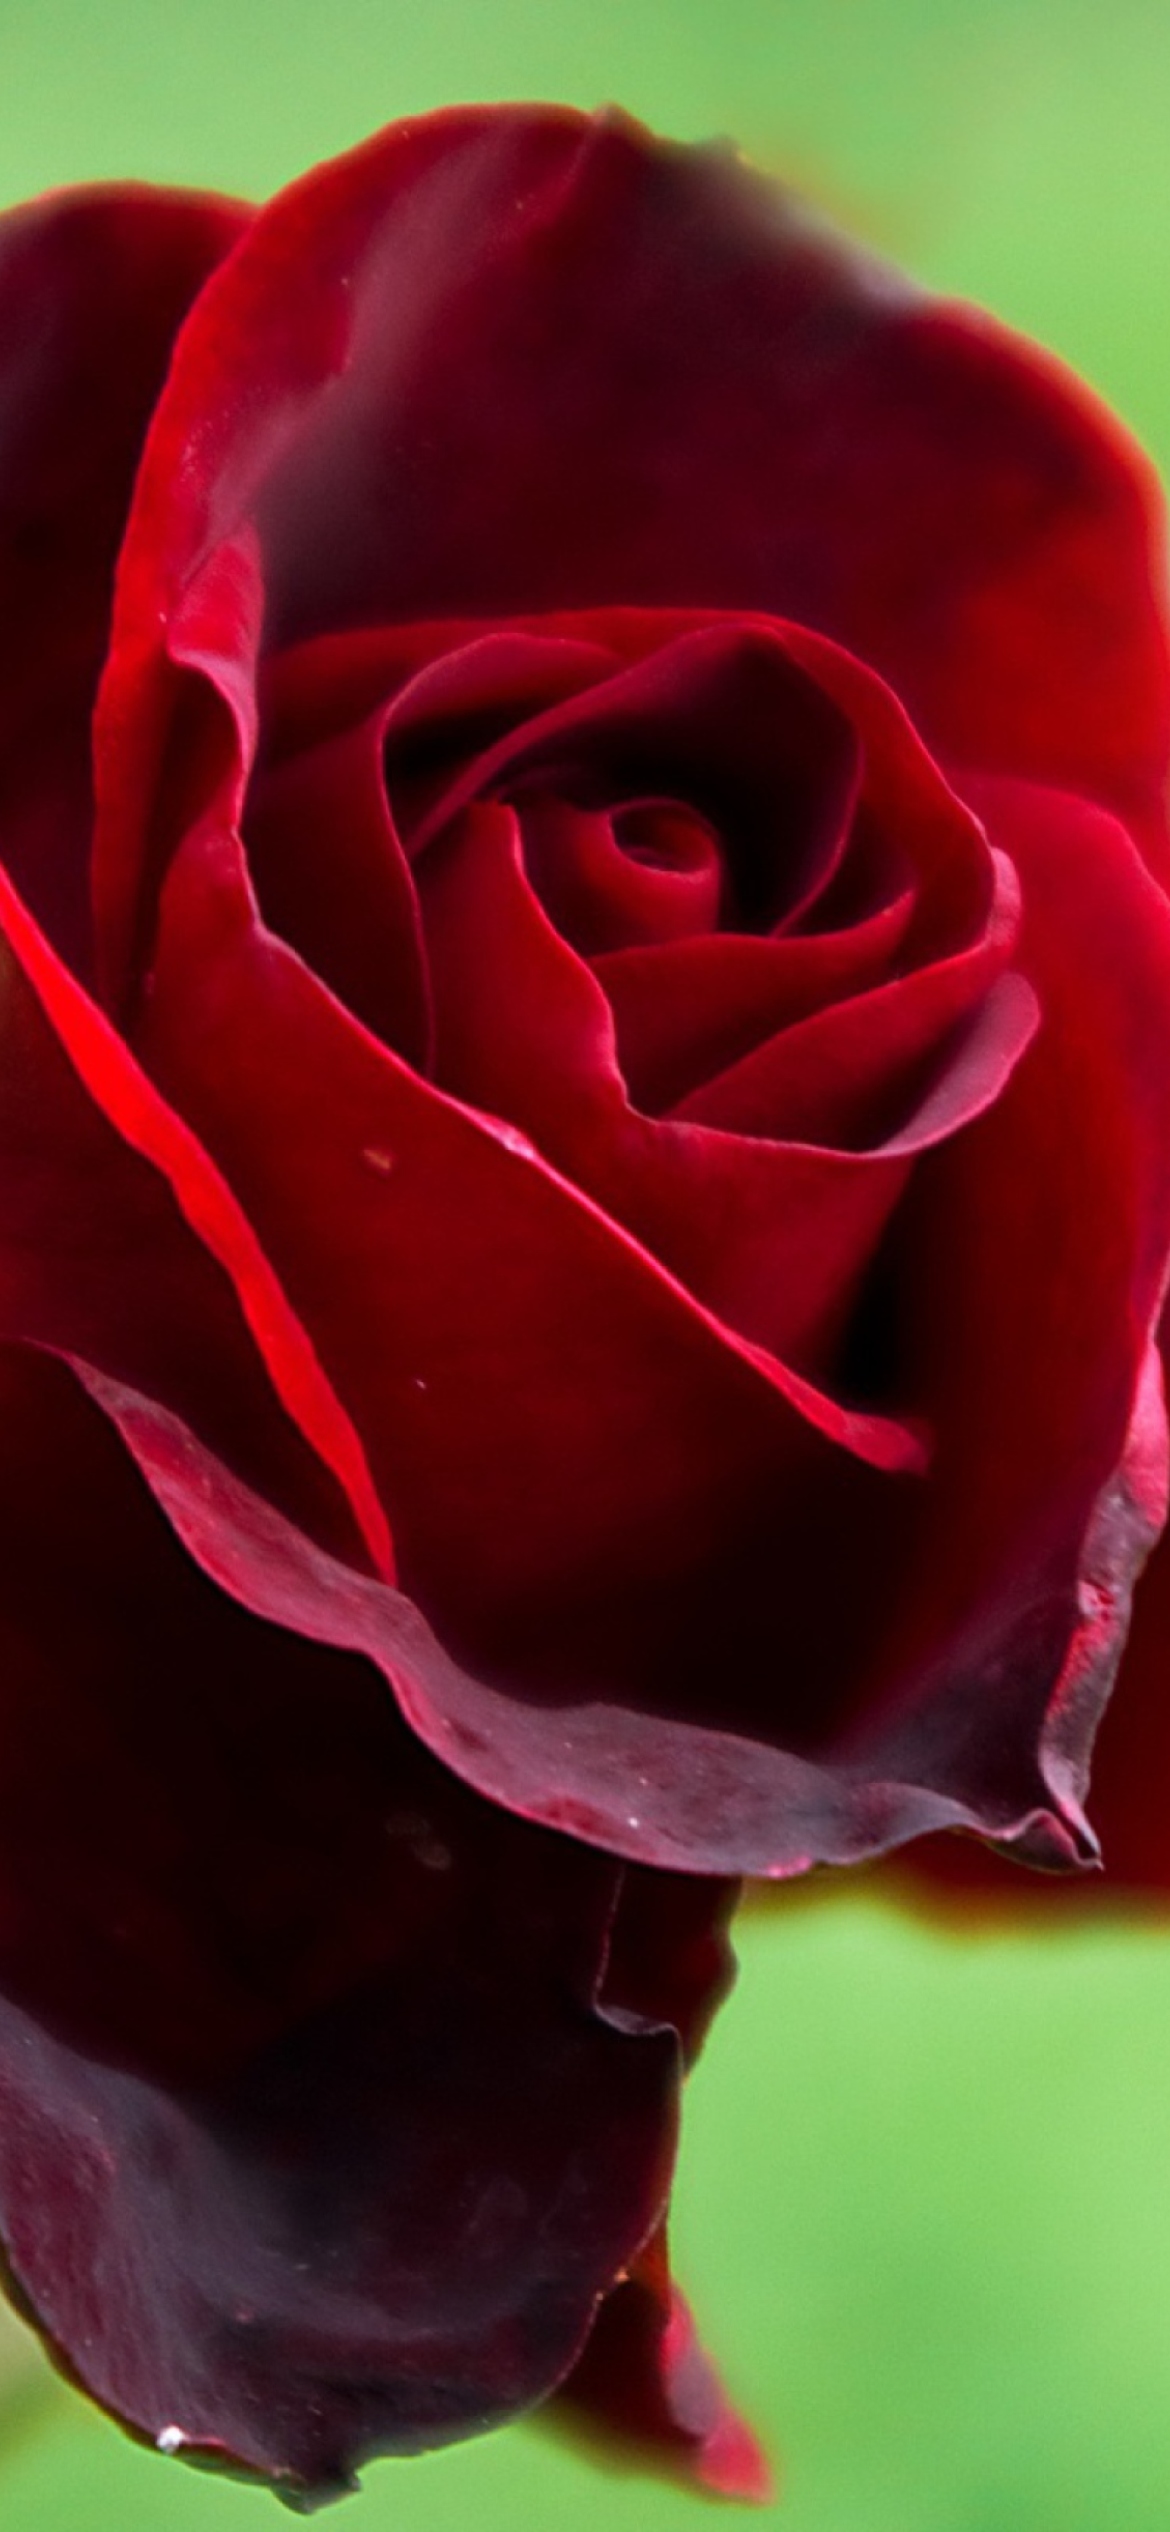 Red Rose wallpaper 1170x2532